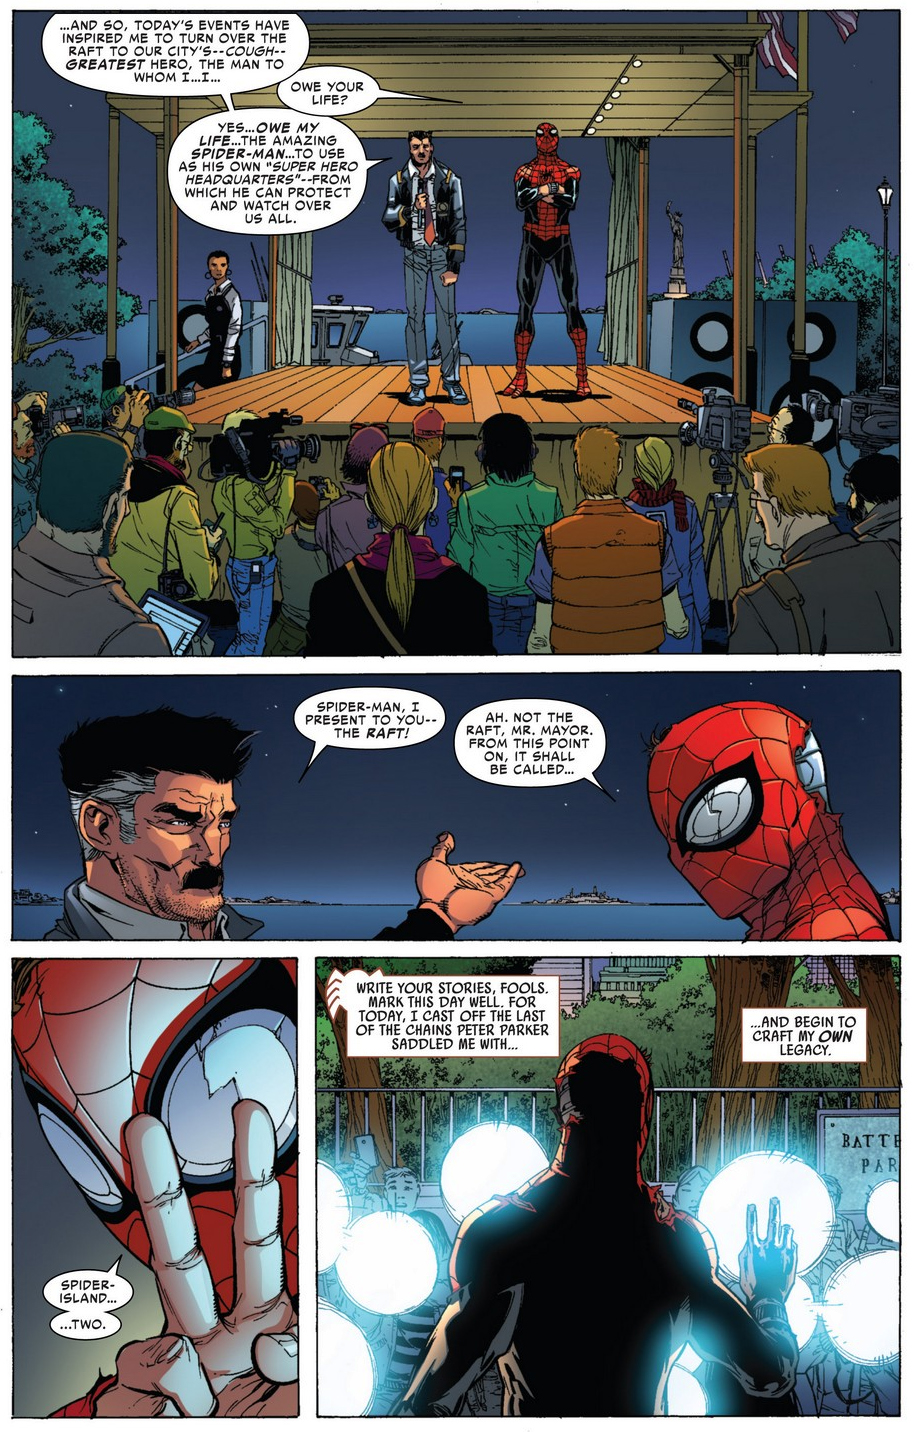 superior spider-man blackmails jonah jameson